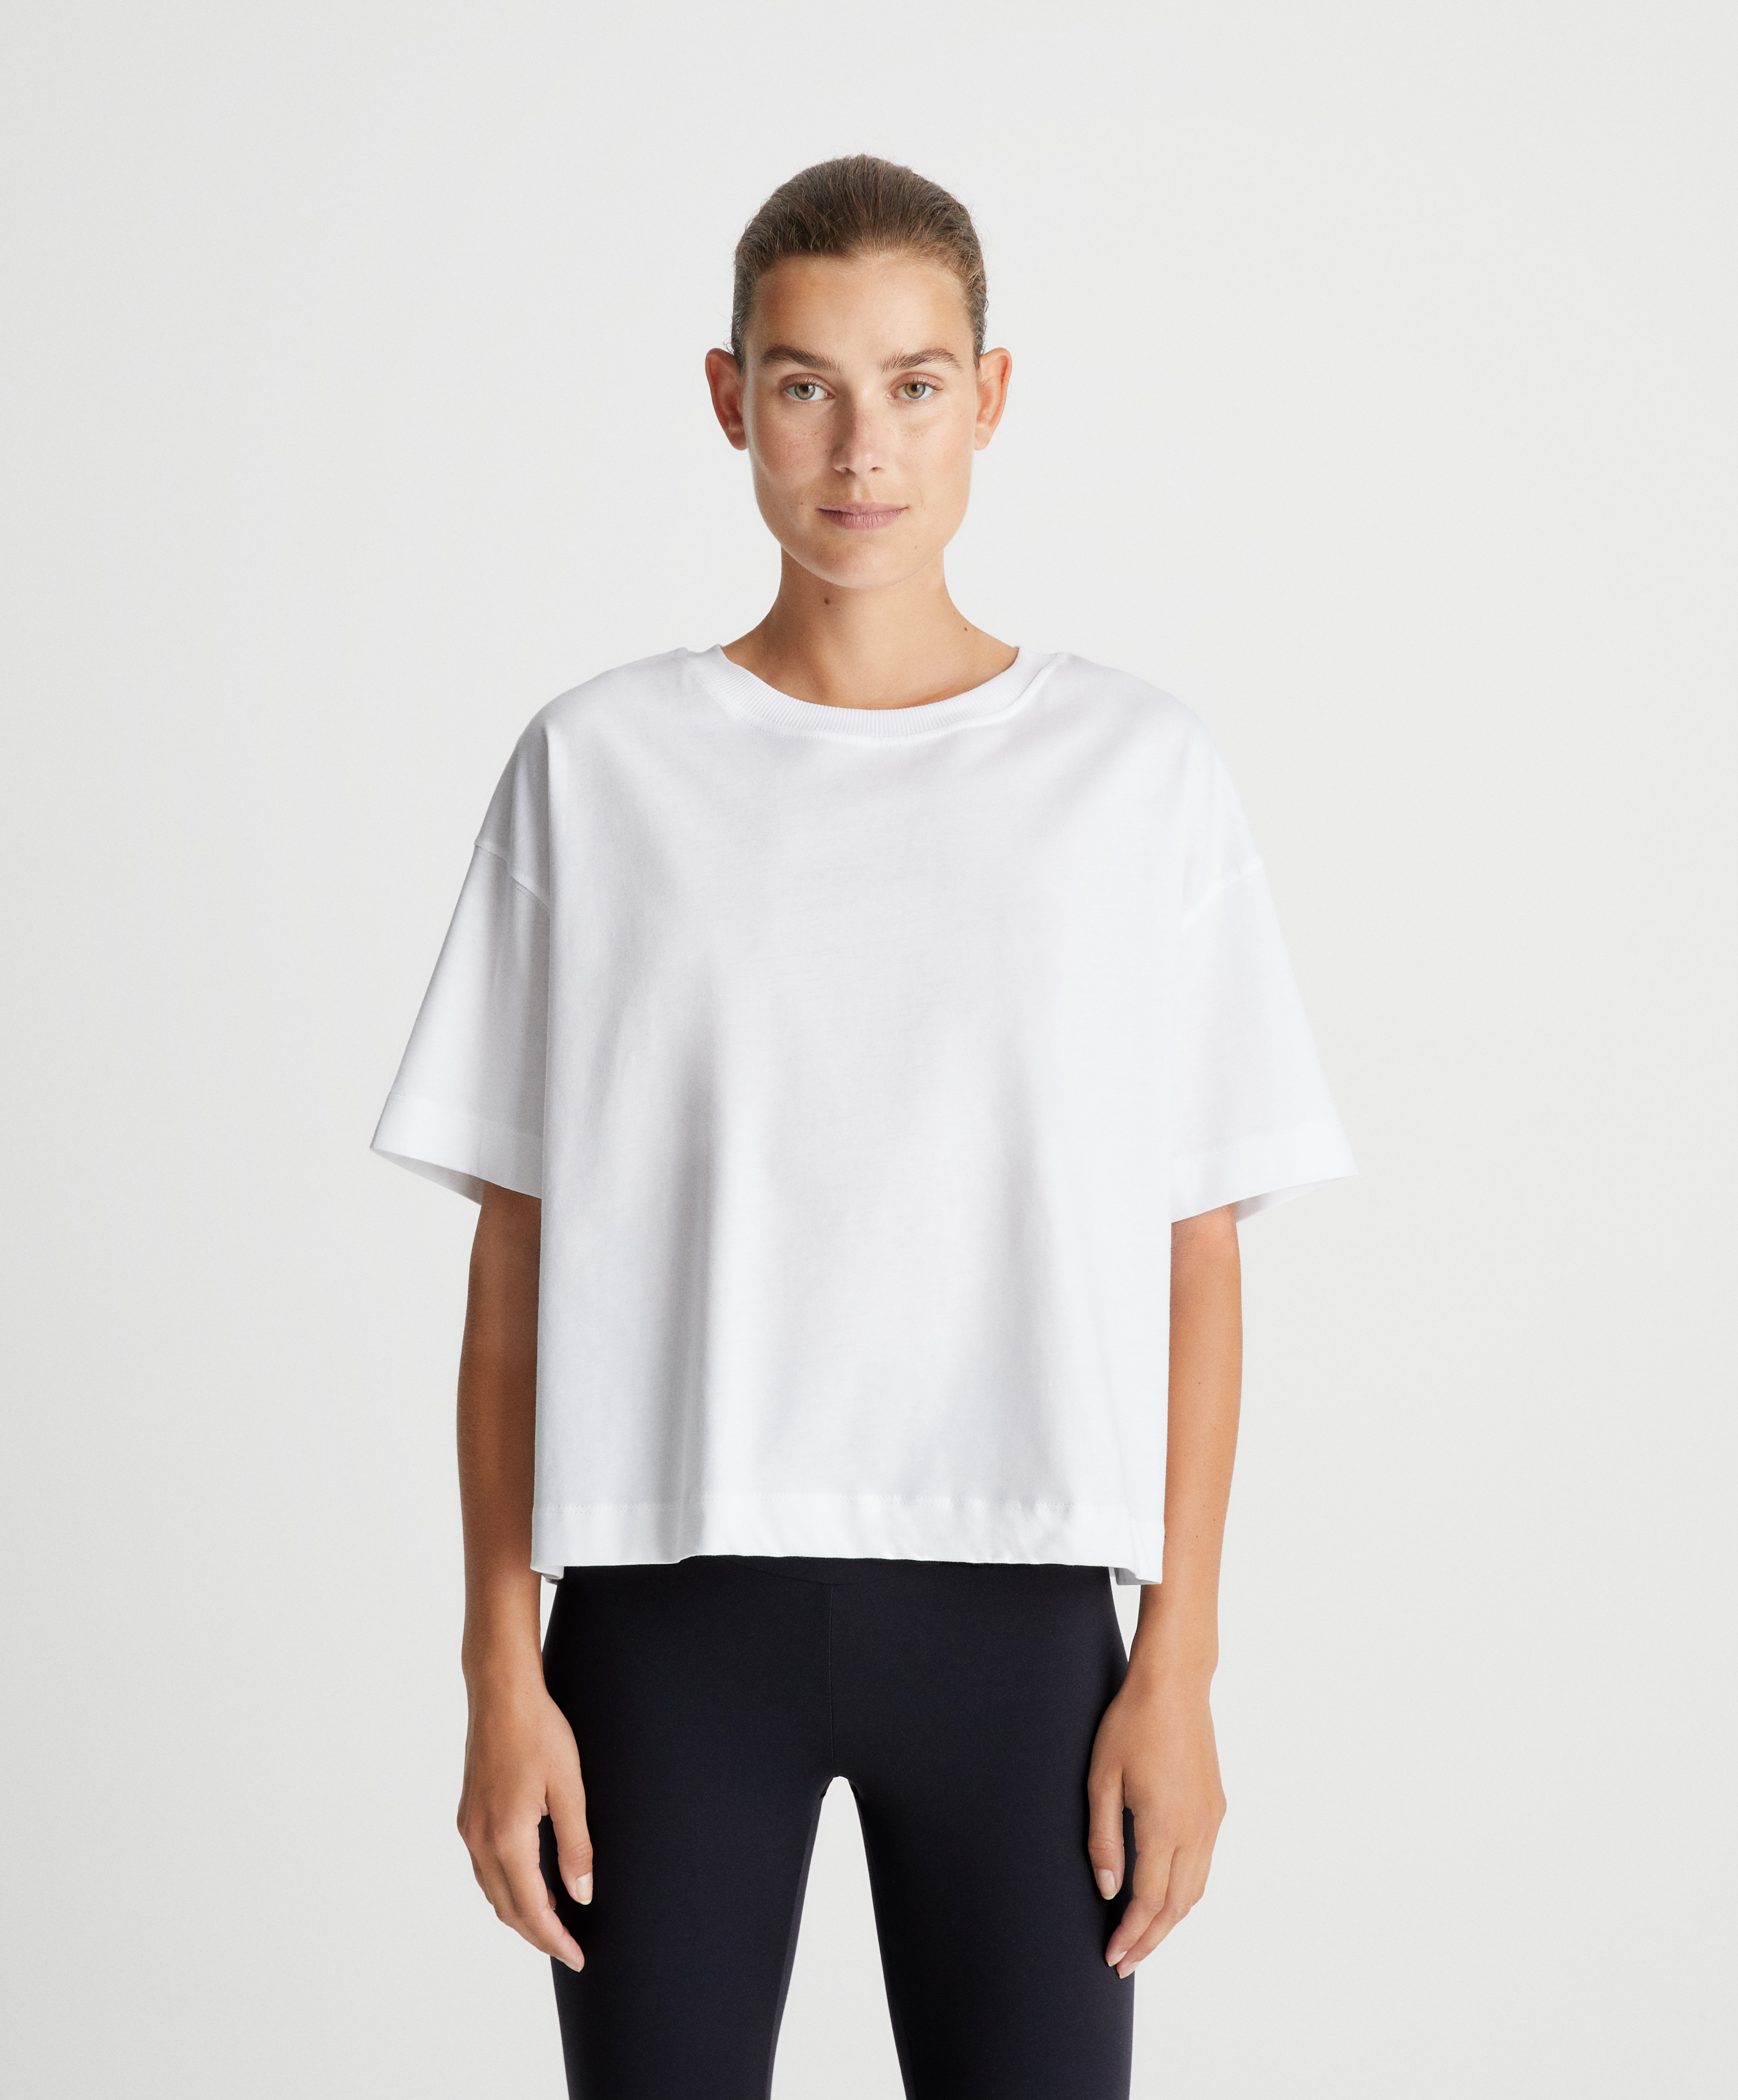 Oversized short-sleeved cotton T-shirt